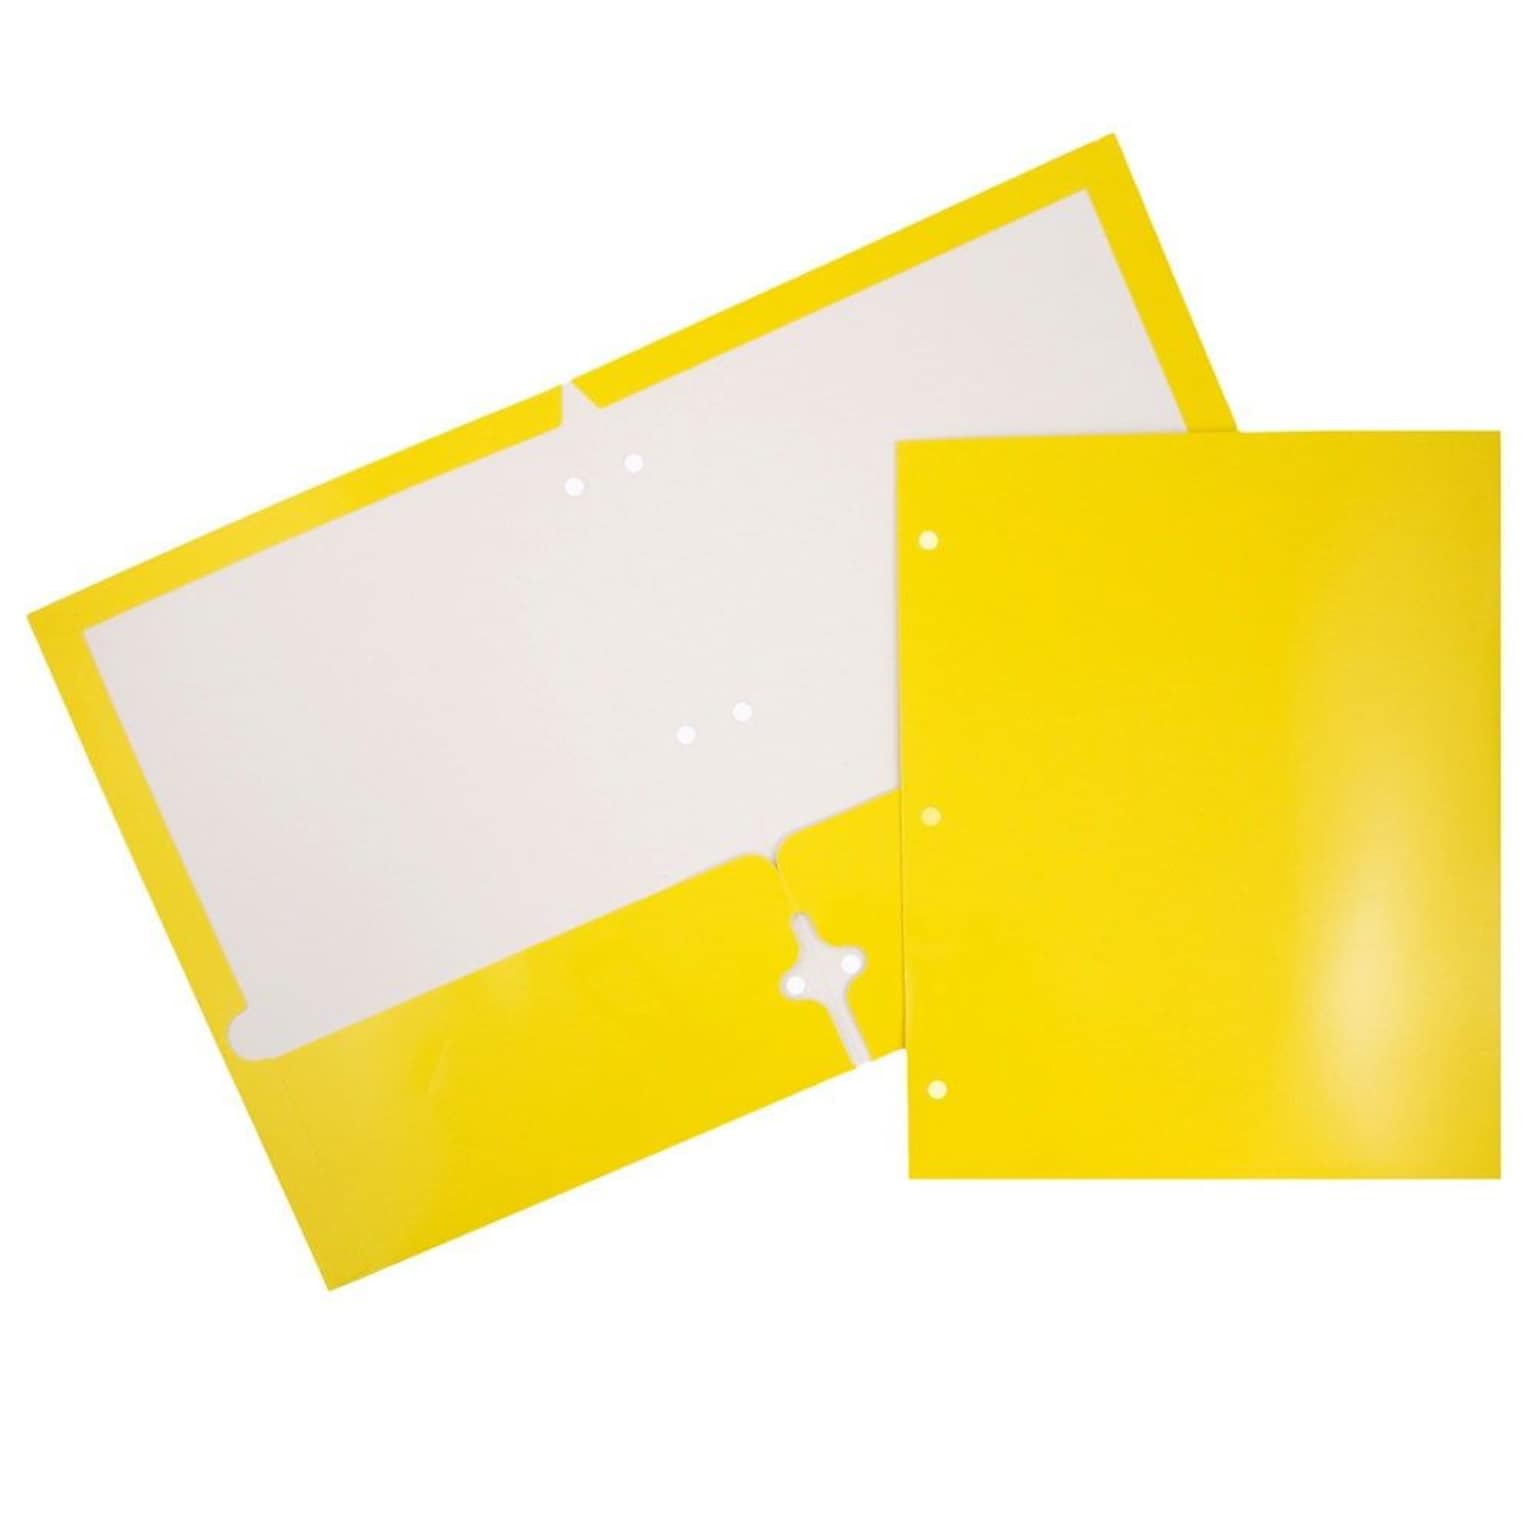 JAM Paper Laminated Glossy 3 Hole Punch Two-Pocket Folders, Yellow, 100/Box (385GHPYEB)